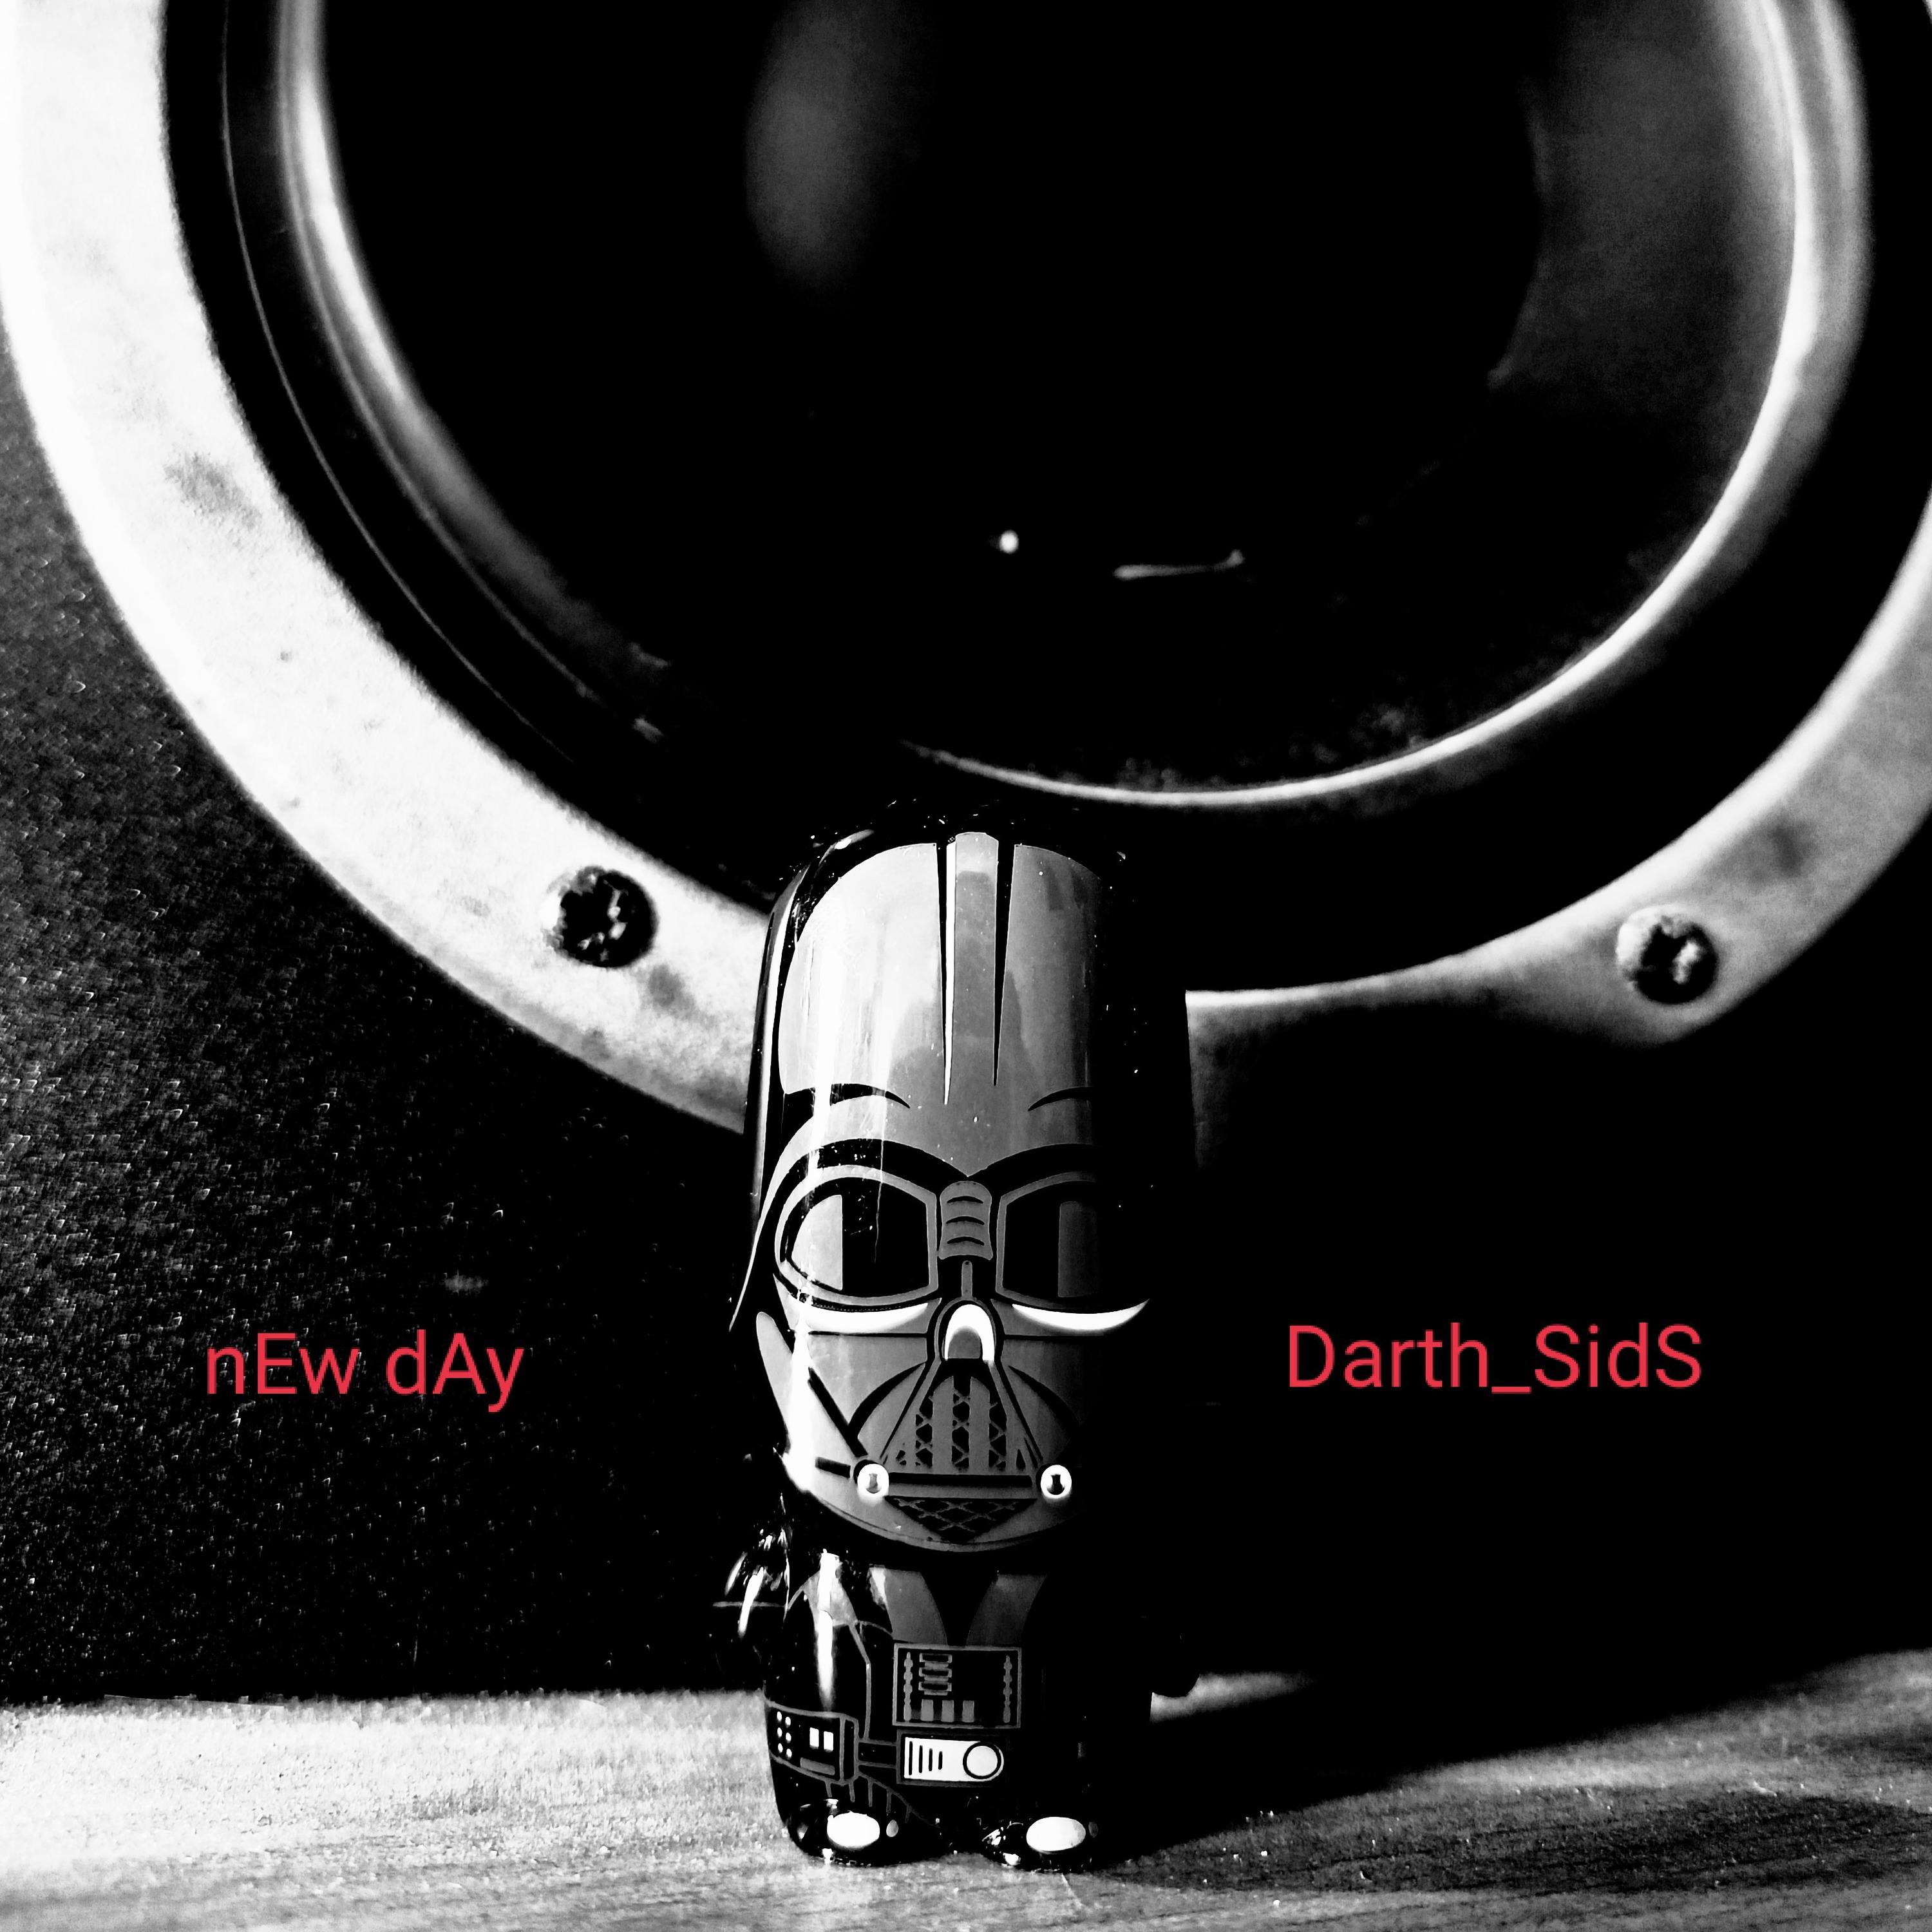 Darth_Sids - New Day